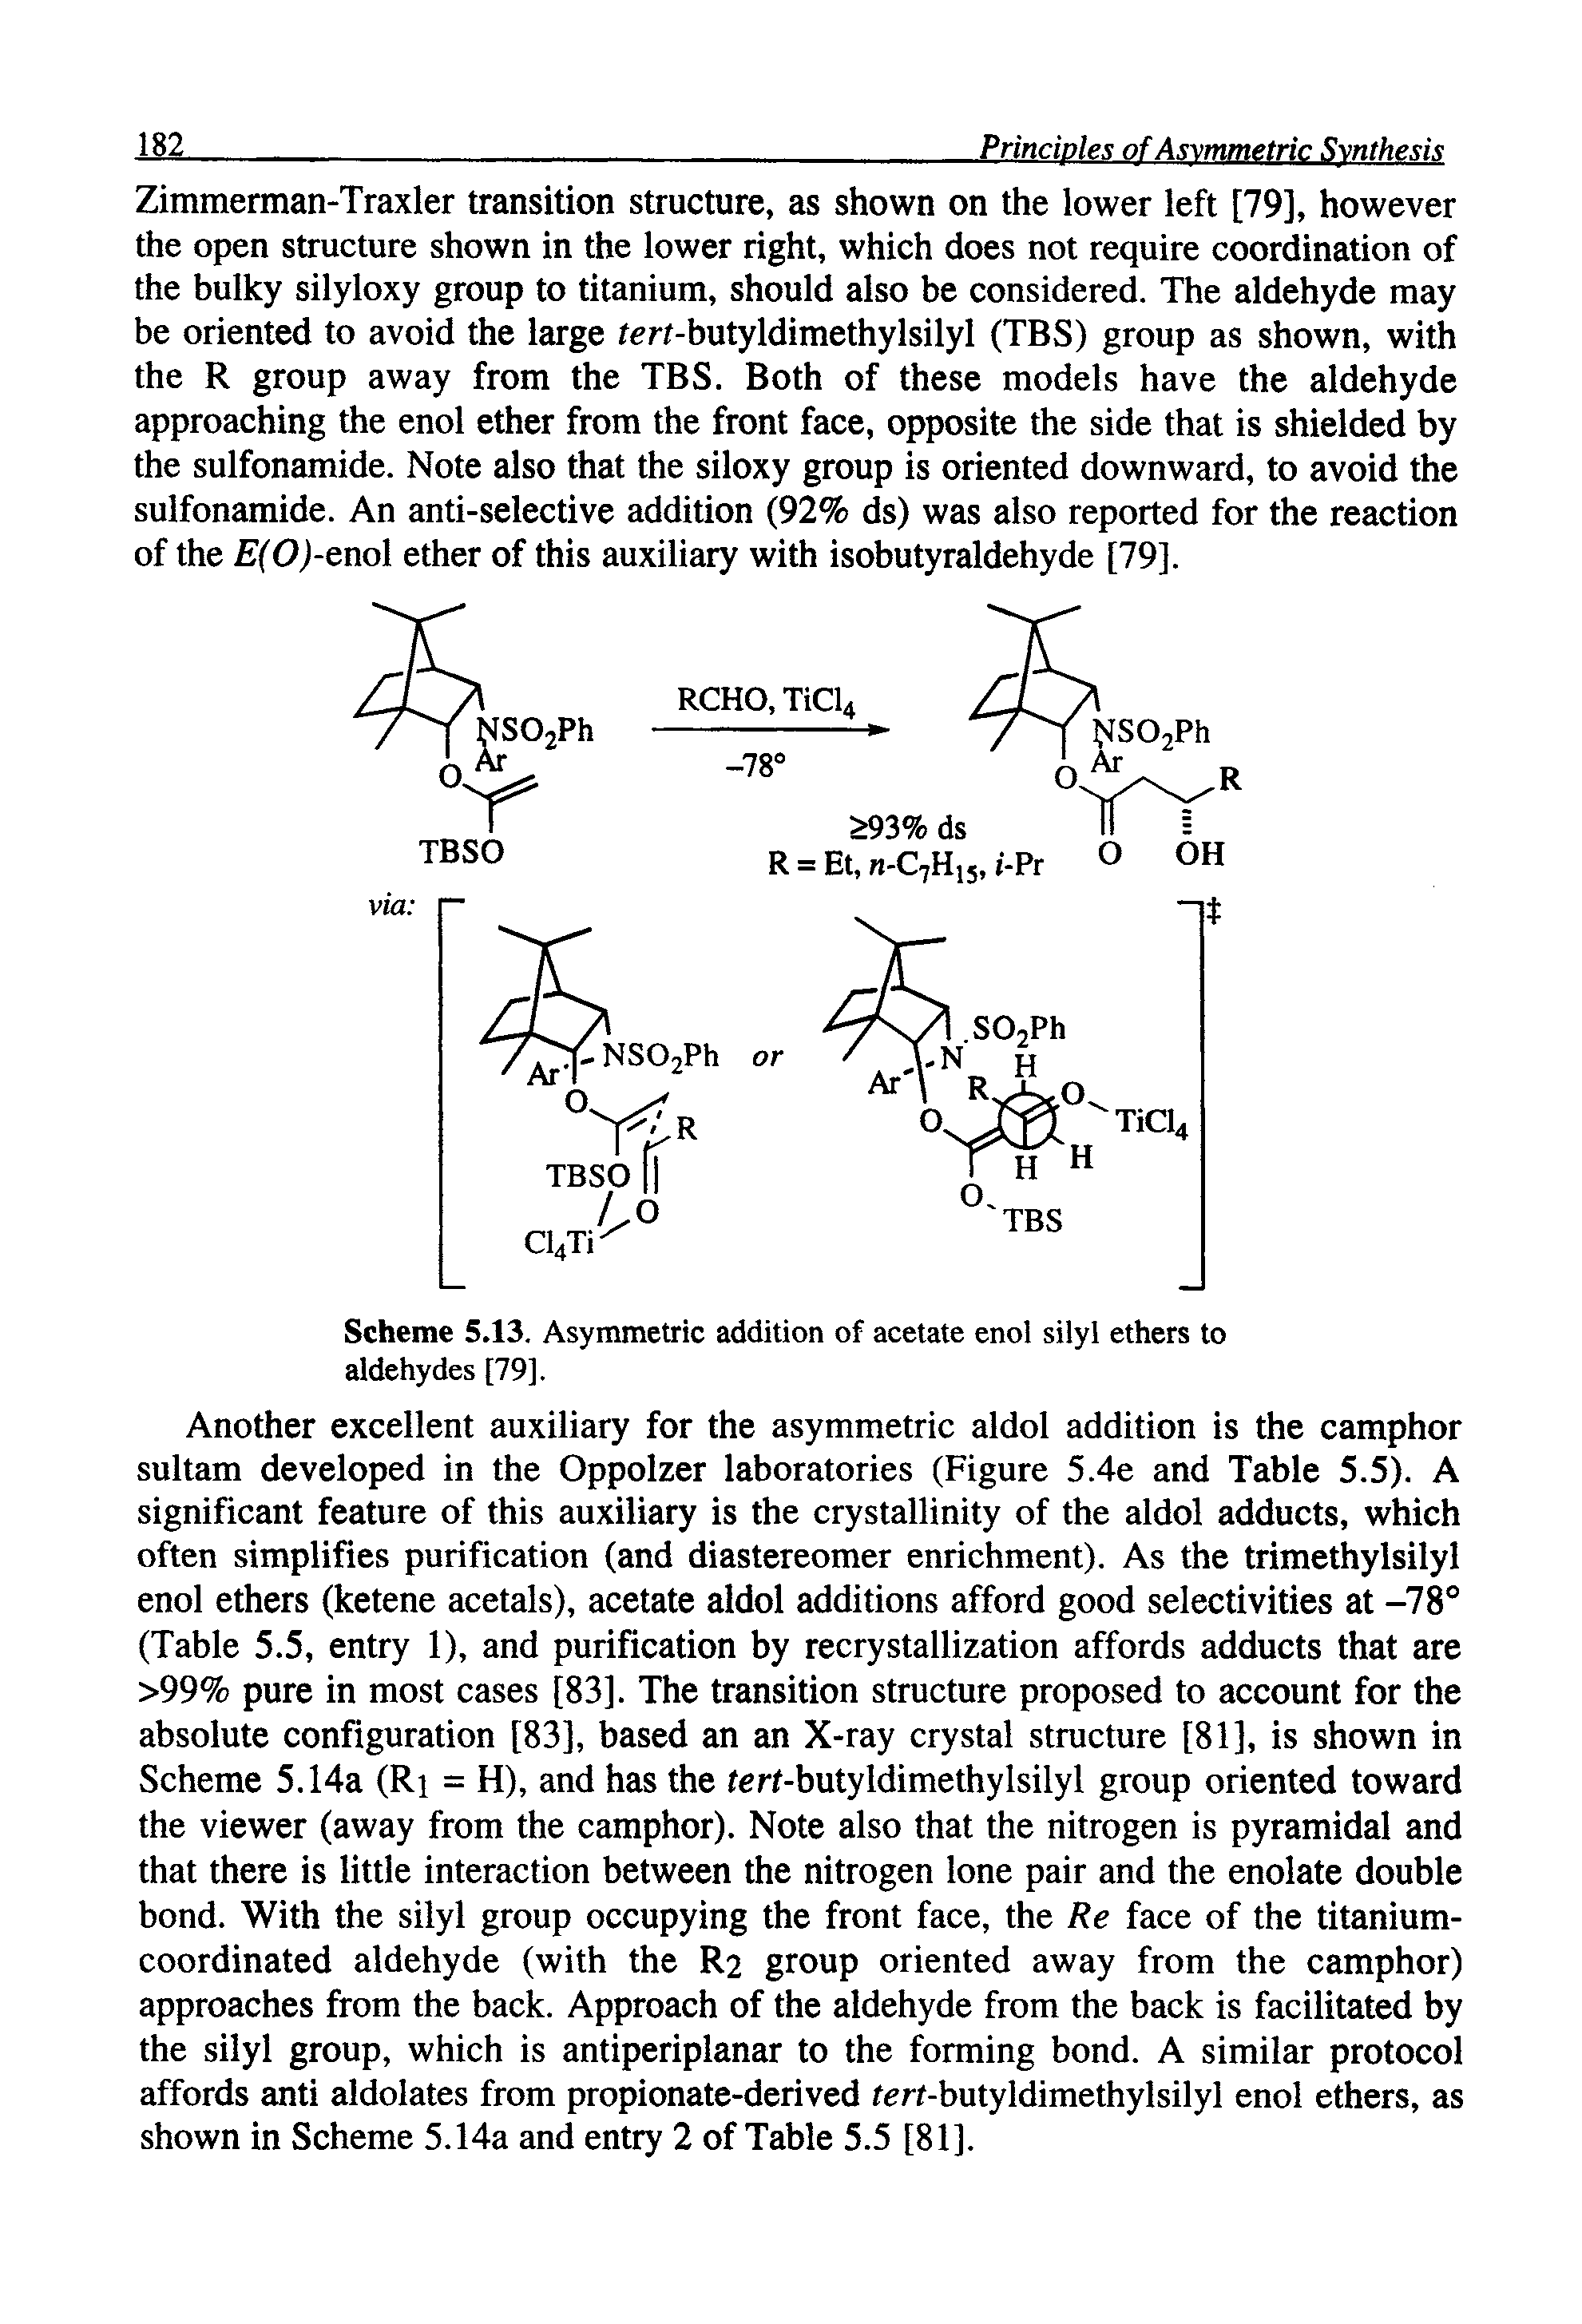 Scheme 5.13. Asymmetric addition of acetate enol silyl ethers to aldehydes [79].